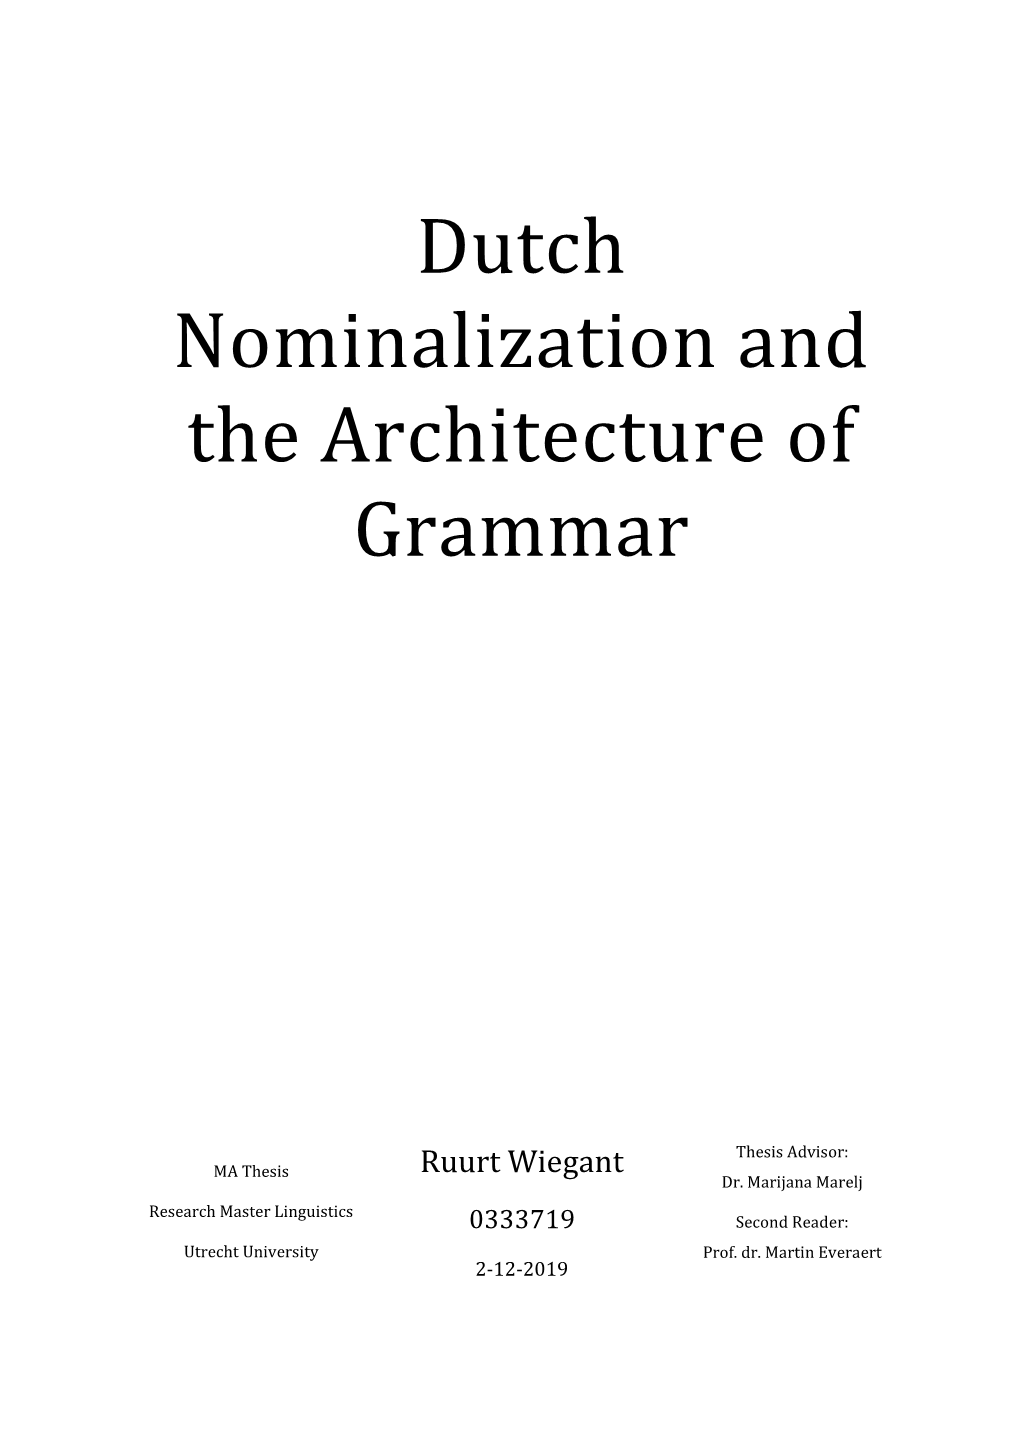 Dutch Nominalization and the Architecture of Grammar